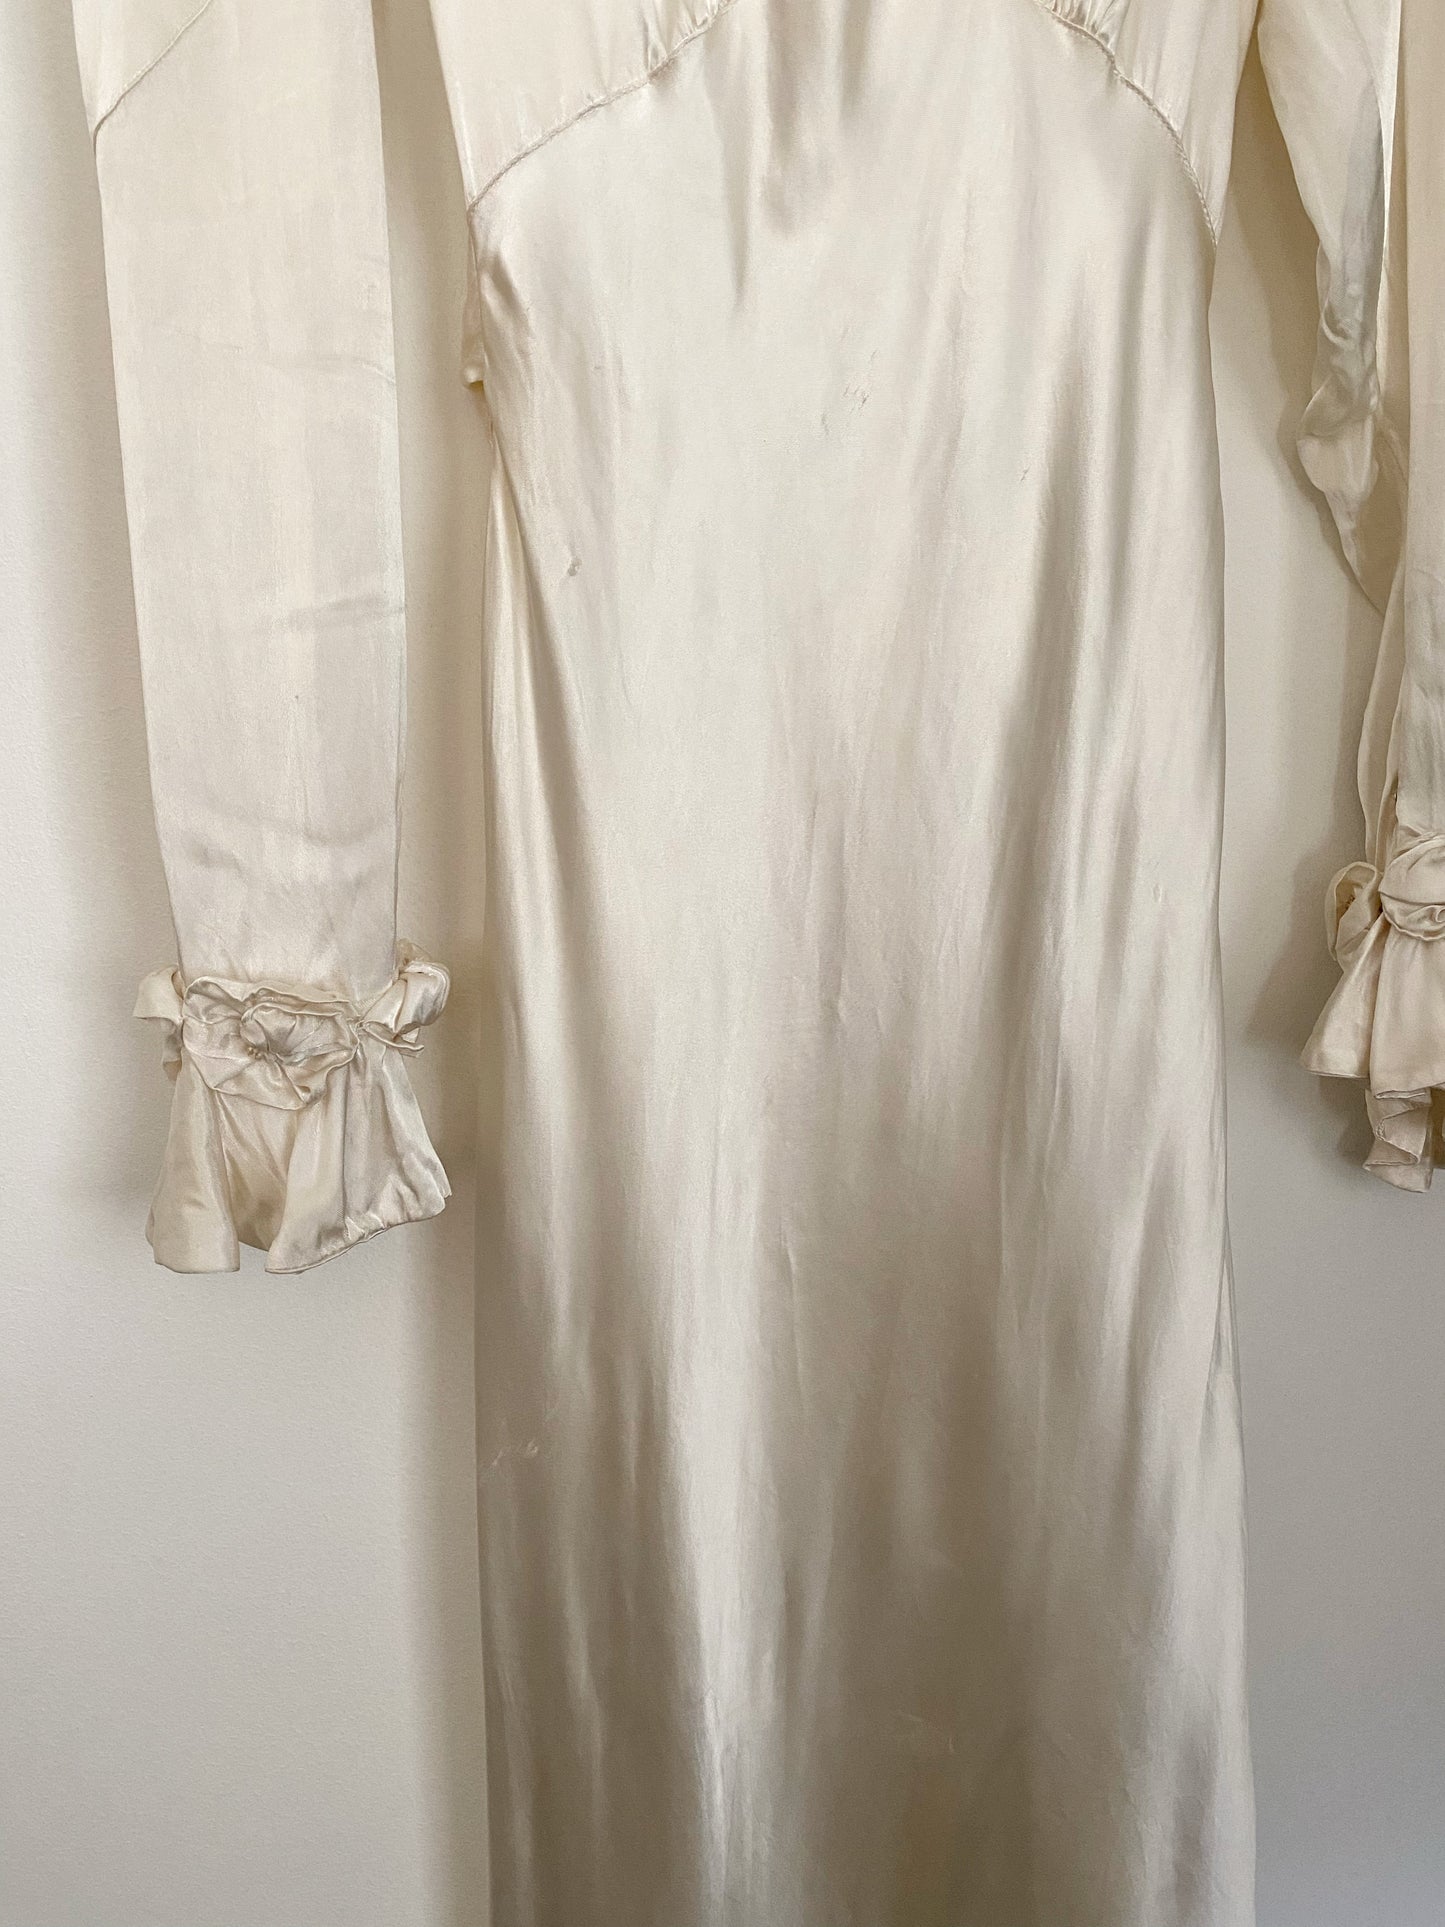 1930s Liquid Satin Bias Cut Wedding Dress- 5/6